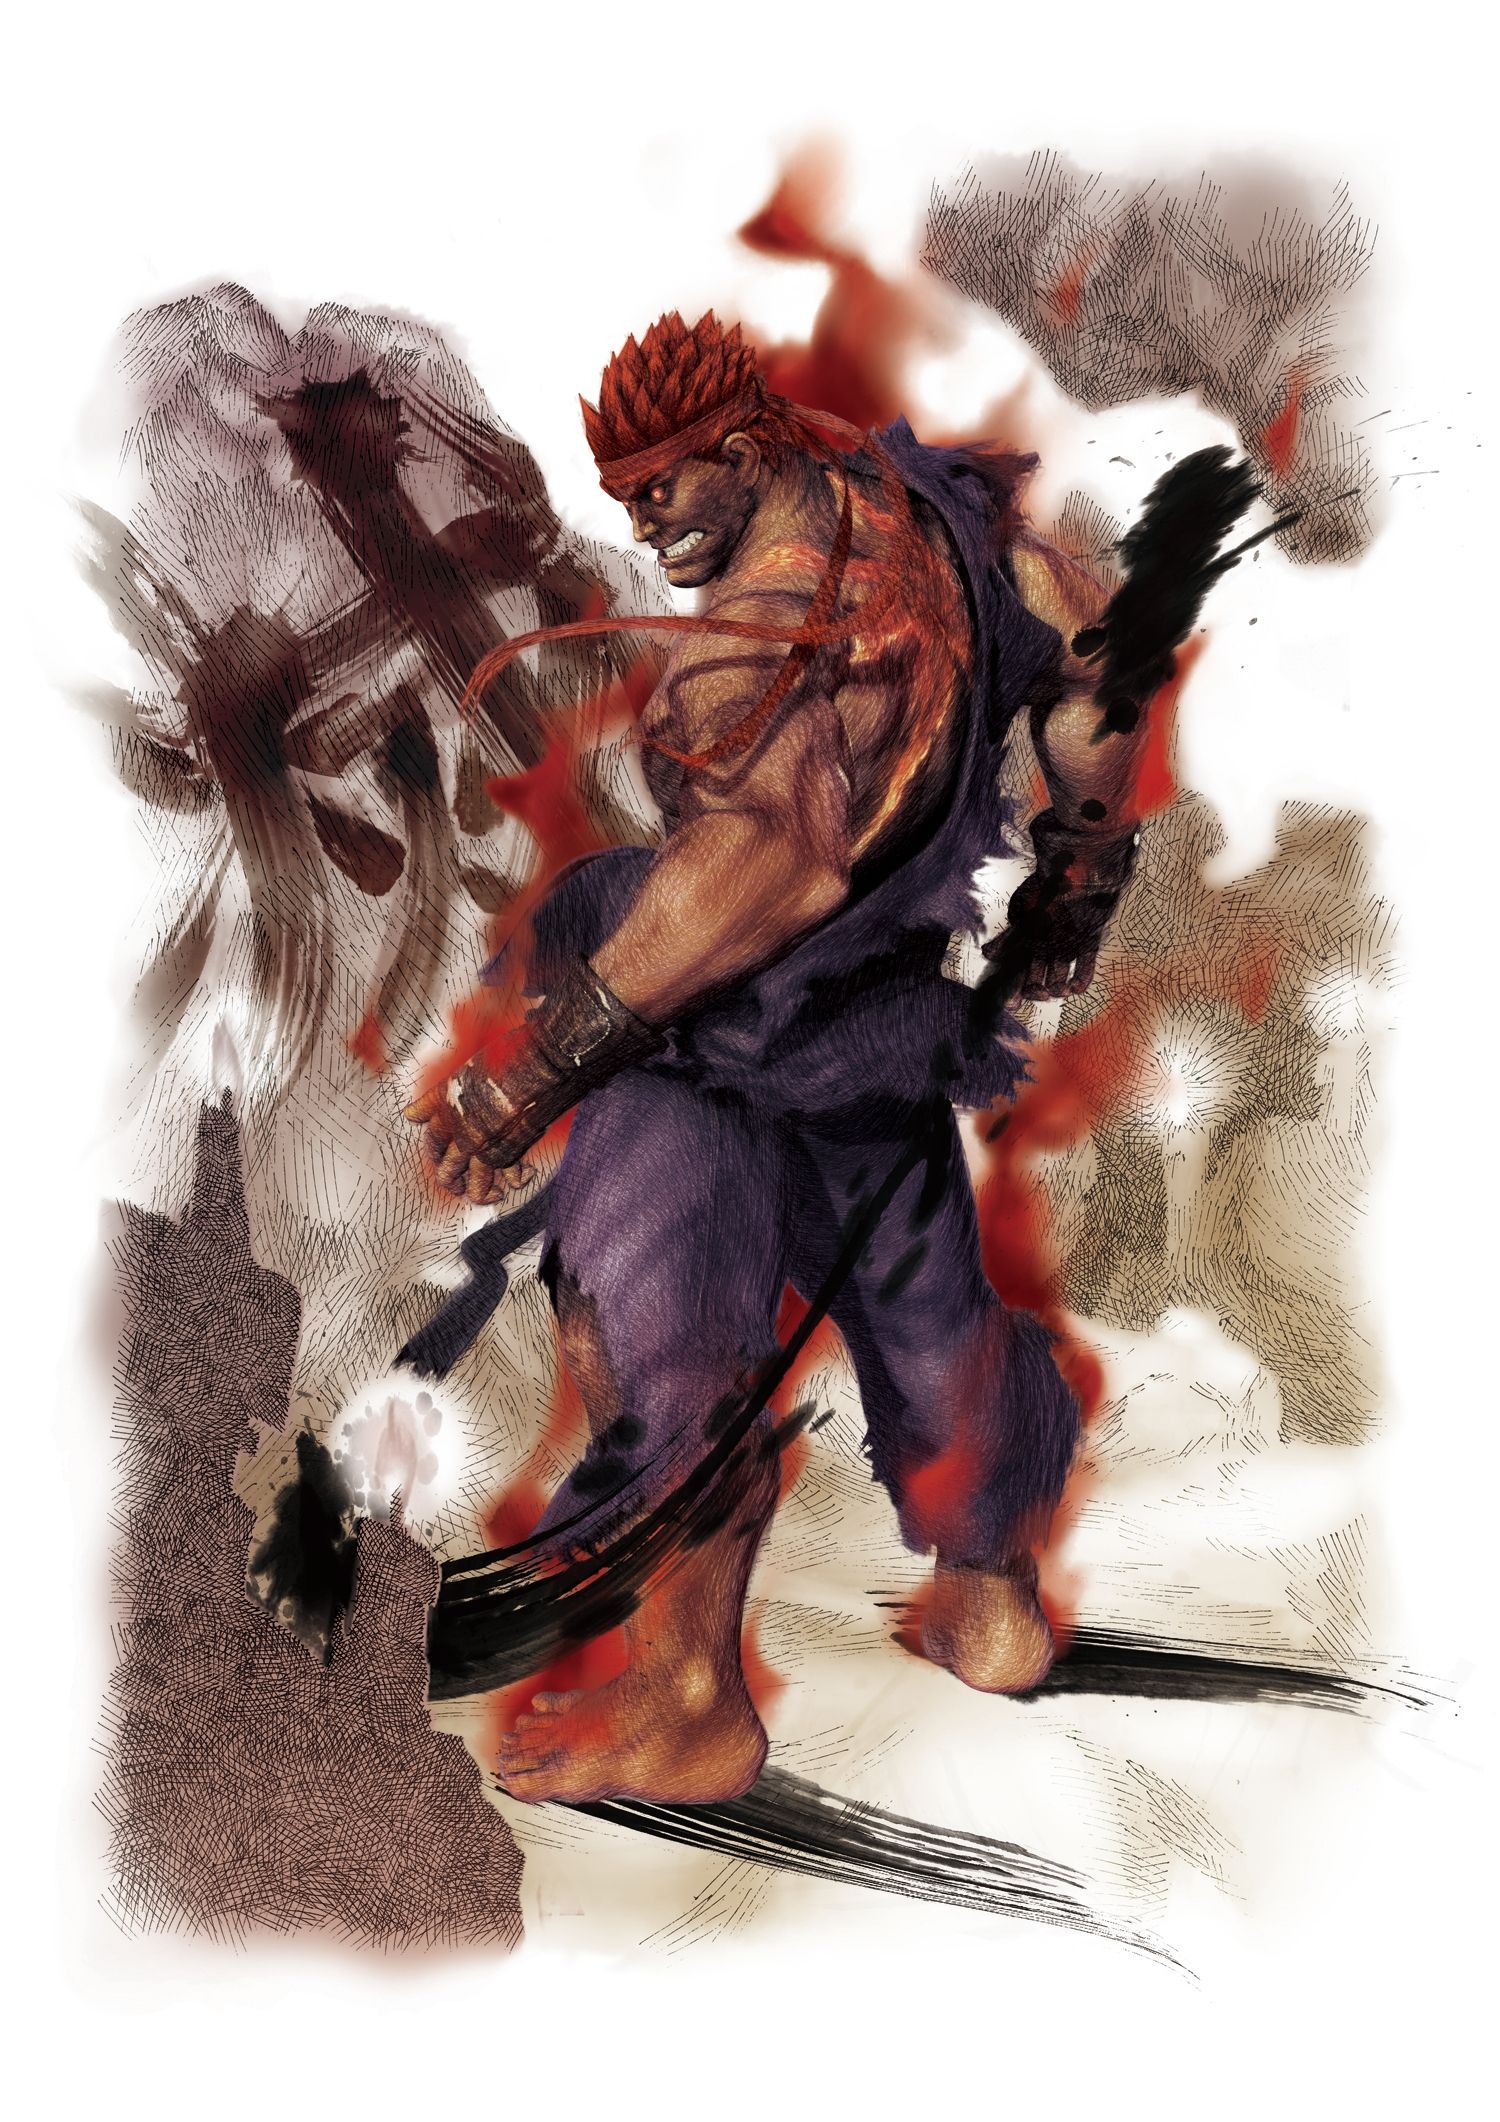 evil ryu street fighter 4